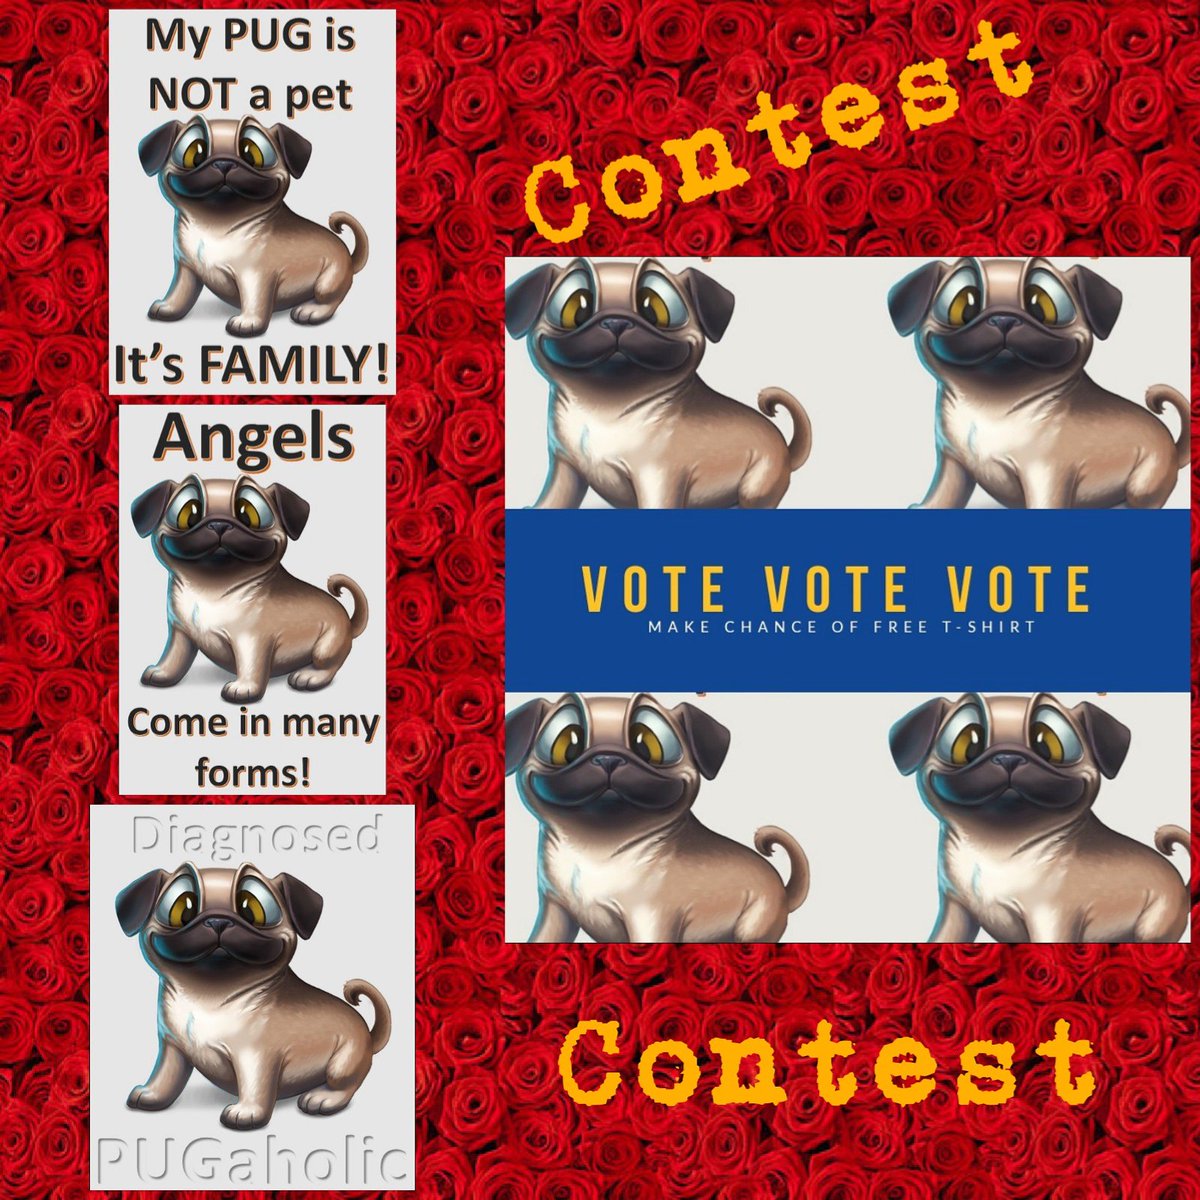 bit.ly/PUG-Design

#PUG #puglove #puglover #contest #pugoftheday #pugnation  #pugworld #dogs #frenchbulldog #bulldoglove #frenchbulldoglove #frenchbulldoglovers #pugswag #pugoftheday #pugslife #pugsofinstagram #pugsnotdrugs #pugsproud_feature